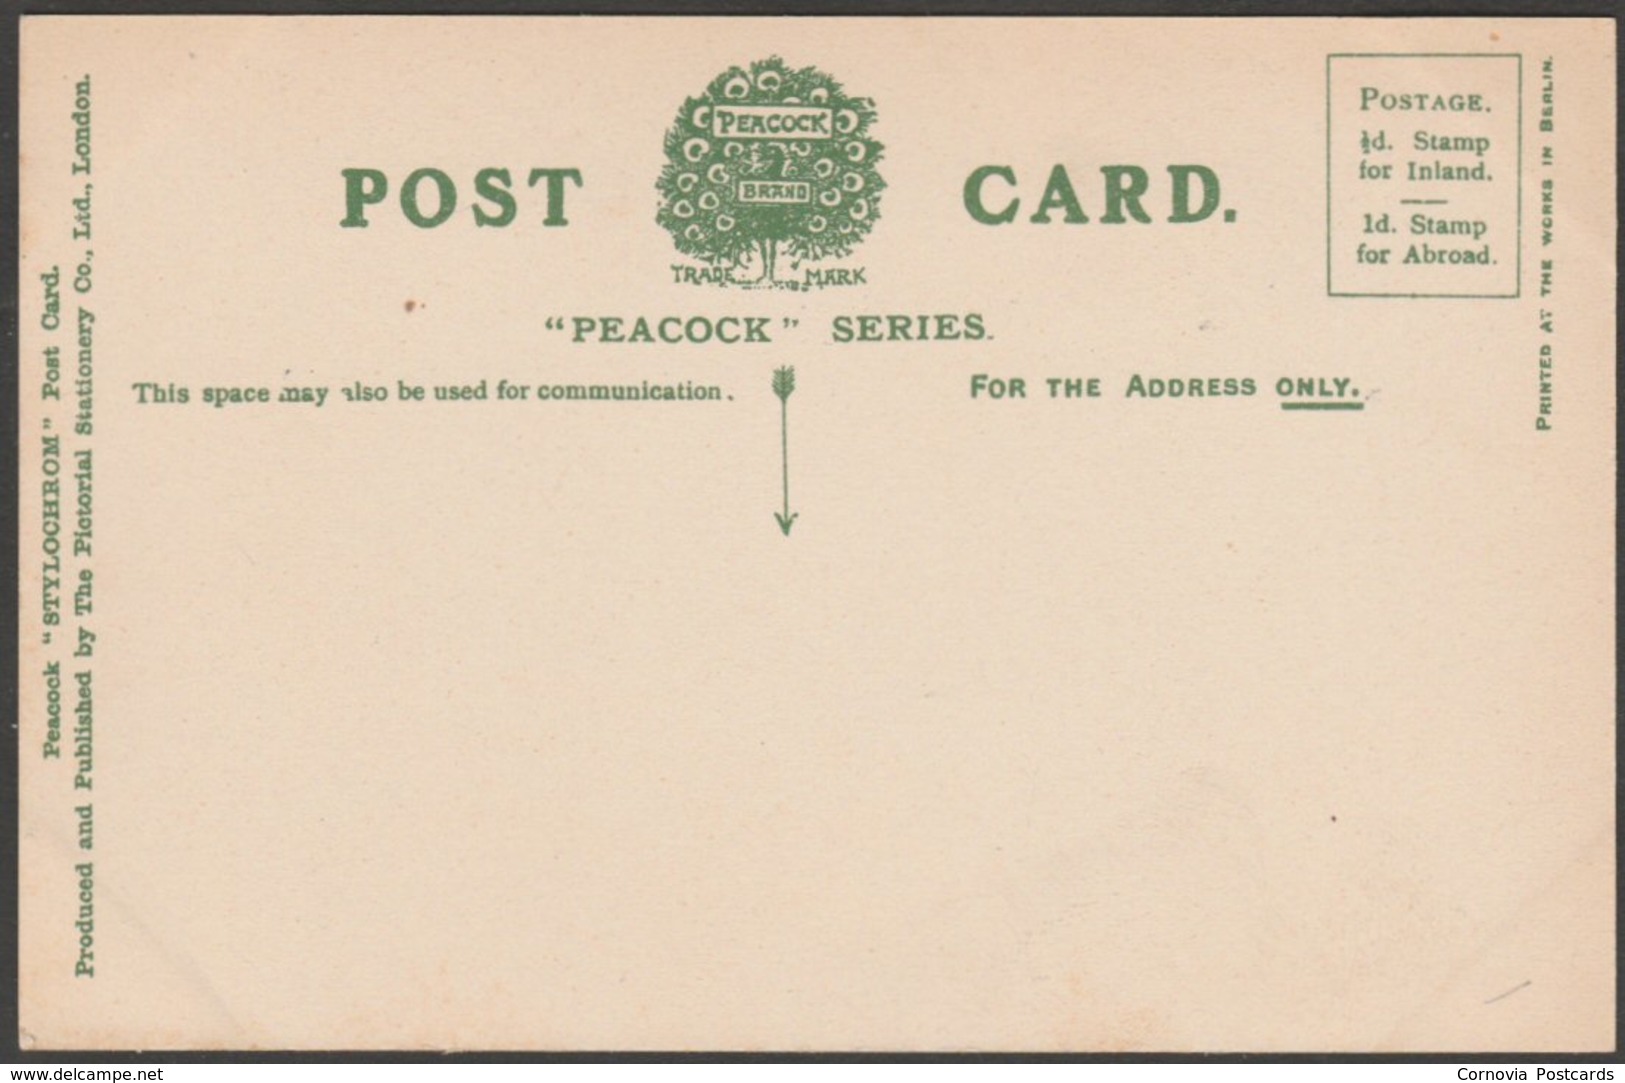 Clovelly, Devon, C.1905-10 - Peacock Stylochrom Postcard - Clovelly